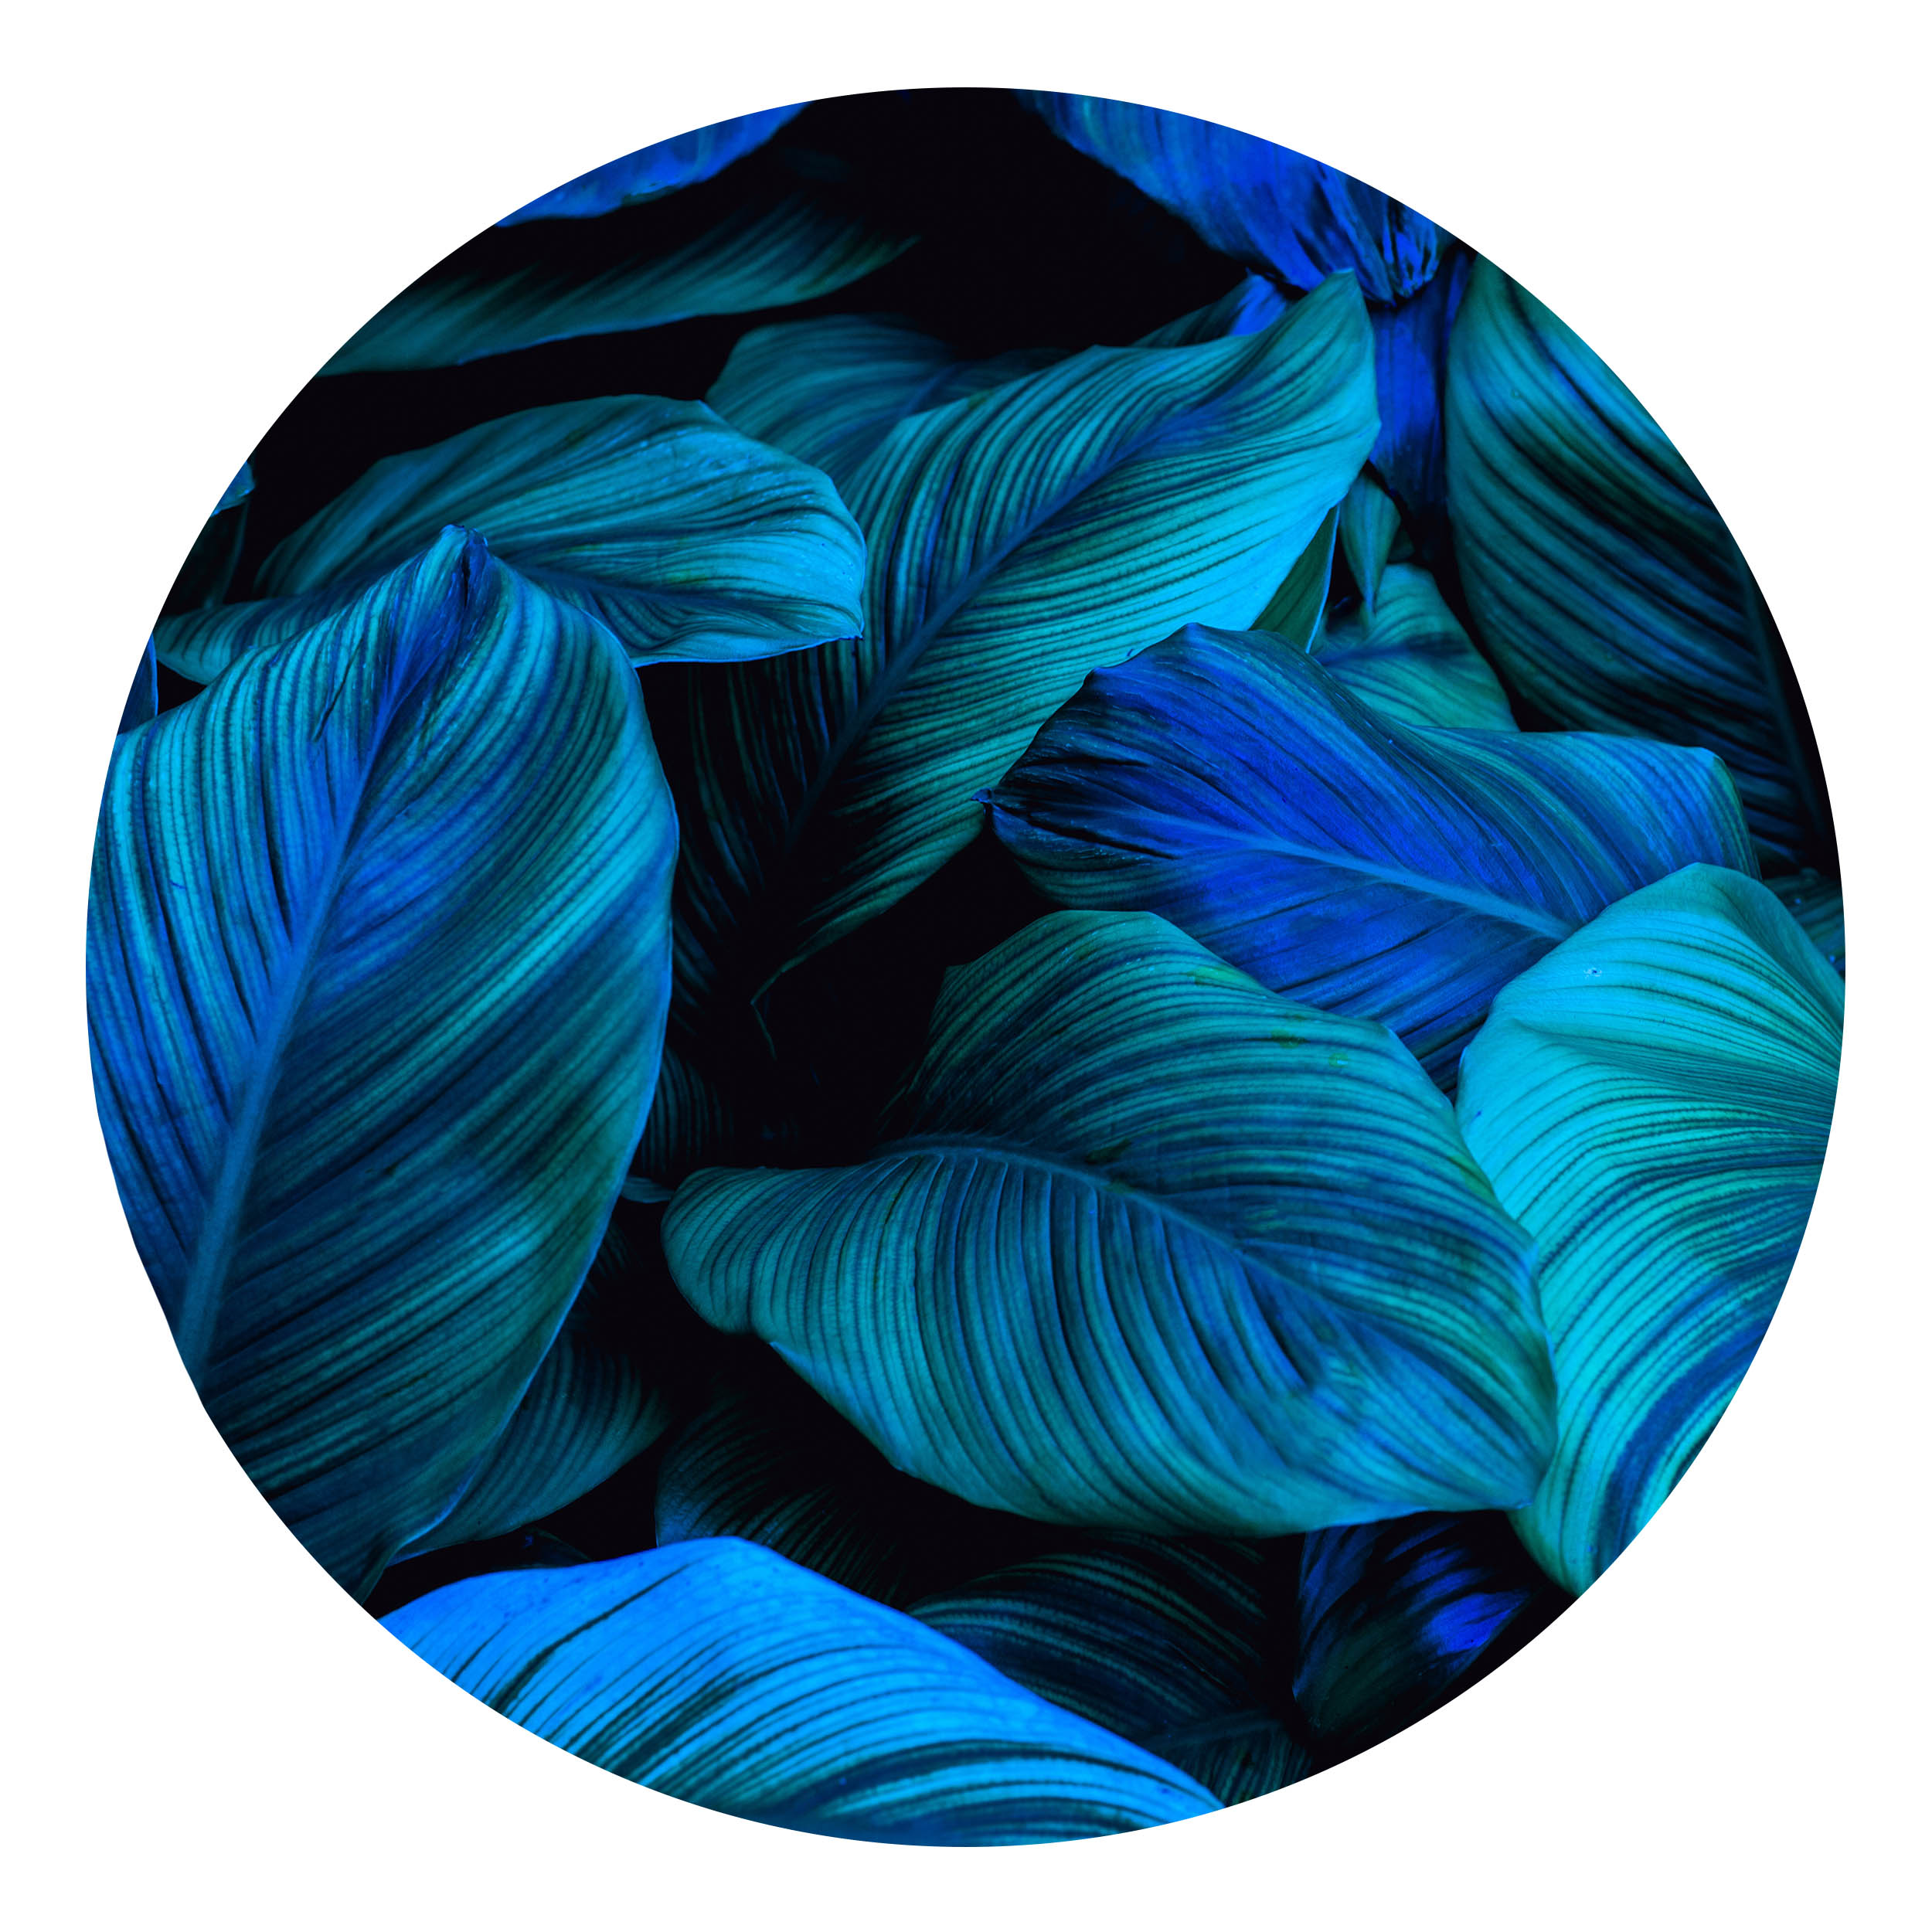 Wandbild Rund Titel: Grüne blaue Pflanzen Textur - Bild Wanddeko Alu Dibond oder Butlerfinish